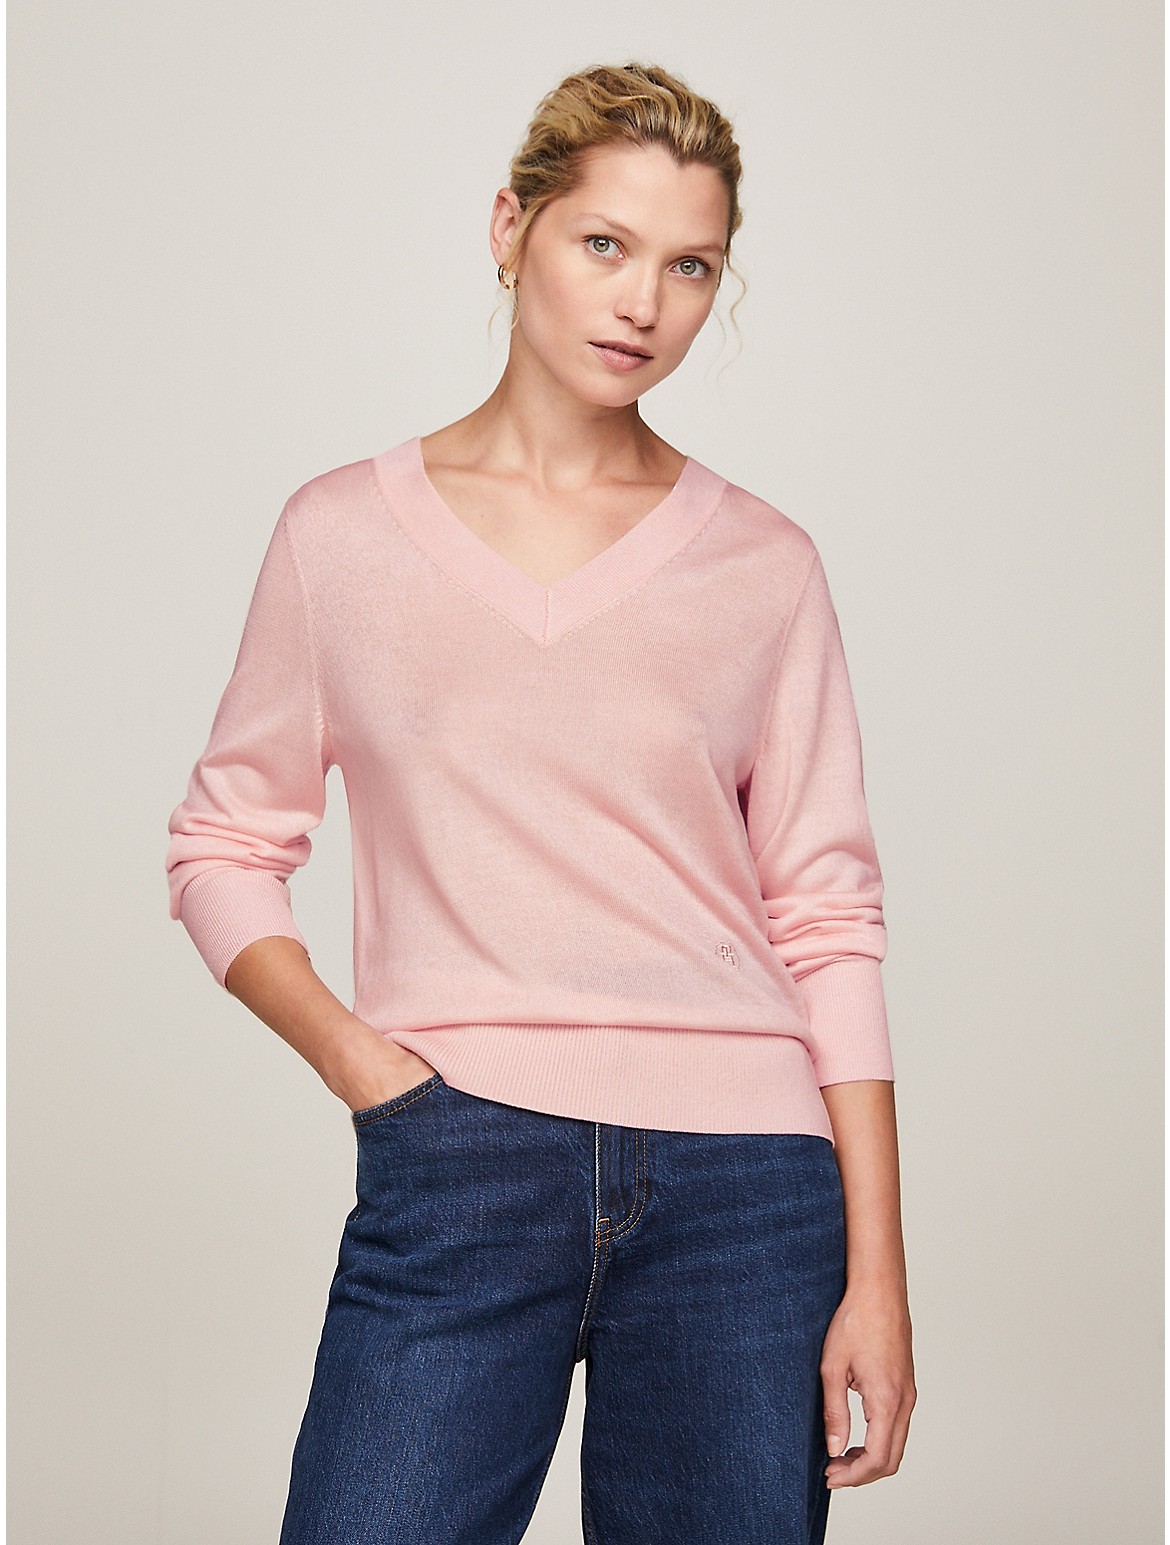 Tommy Hilfiger Women's Solid V-Neck Sweater